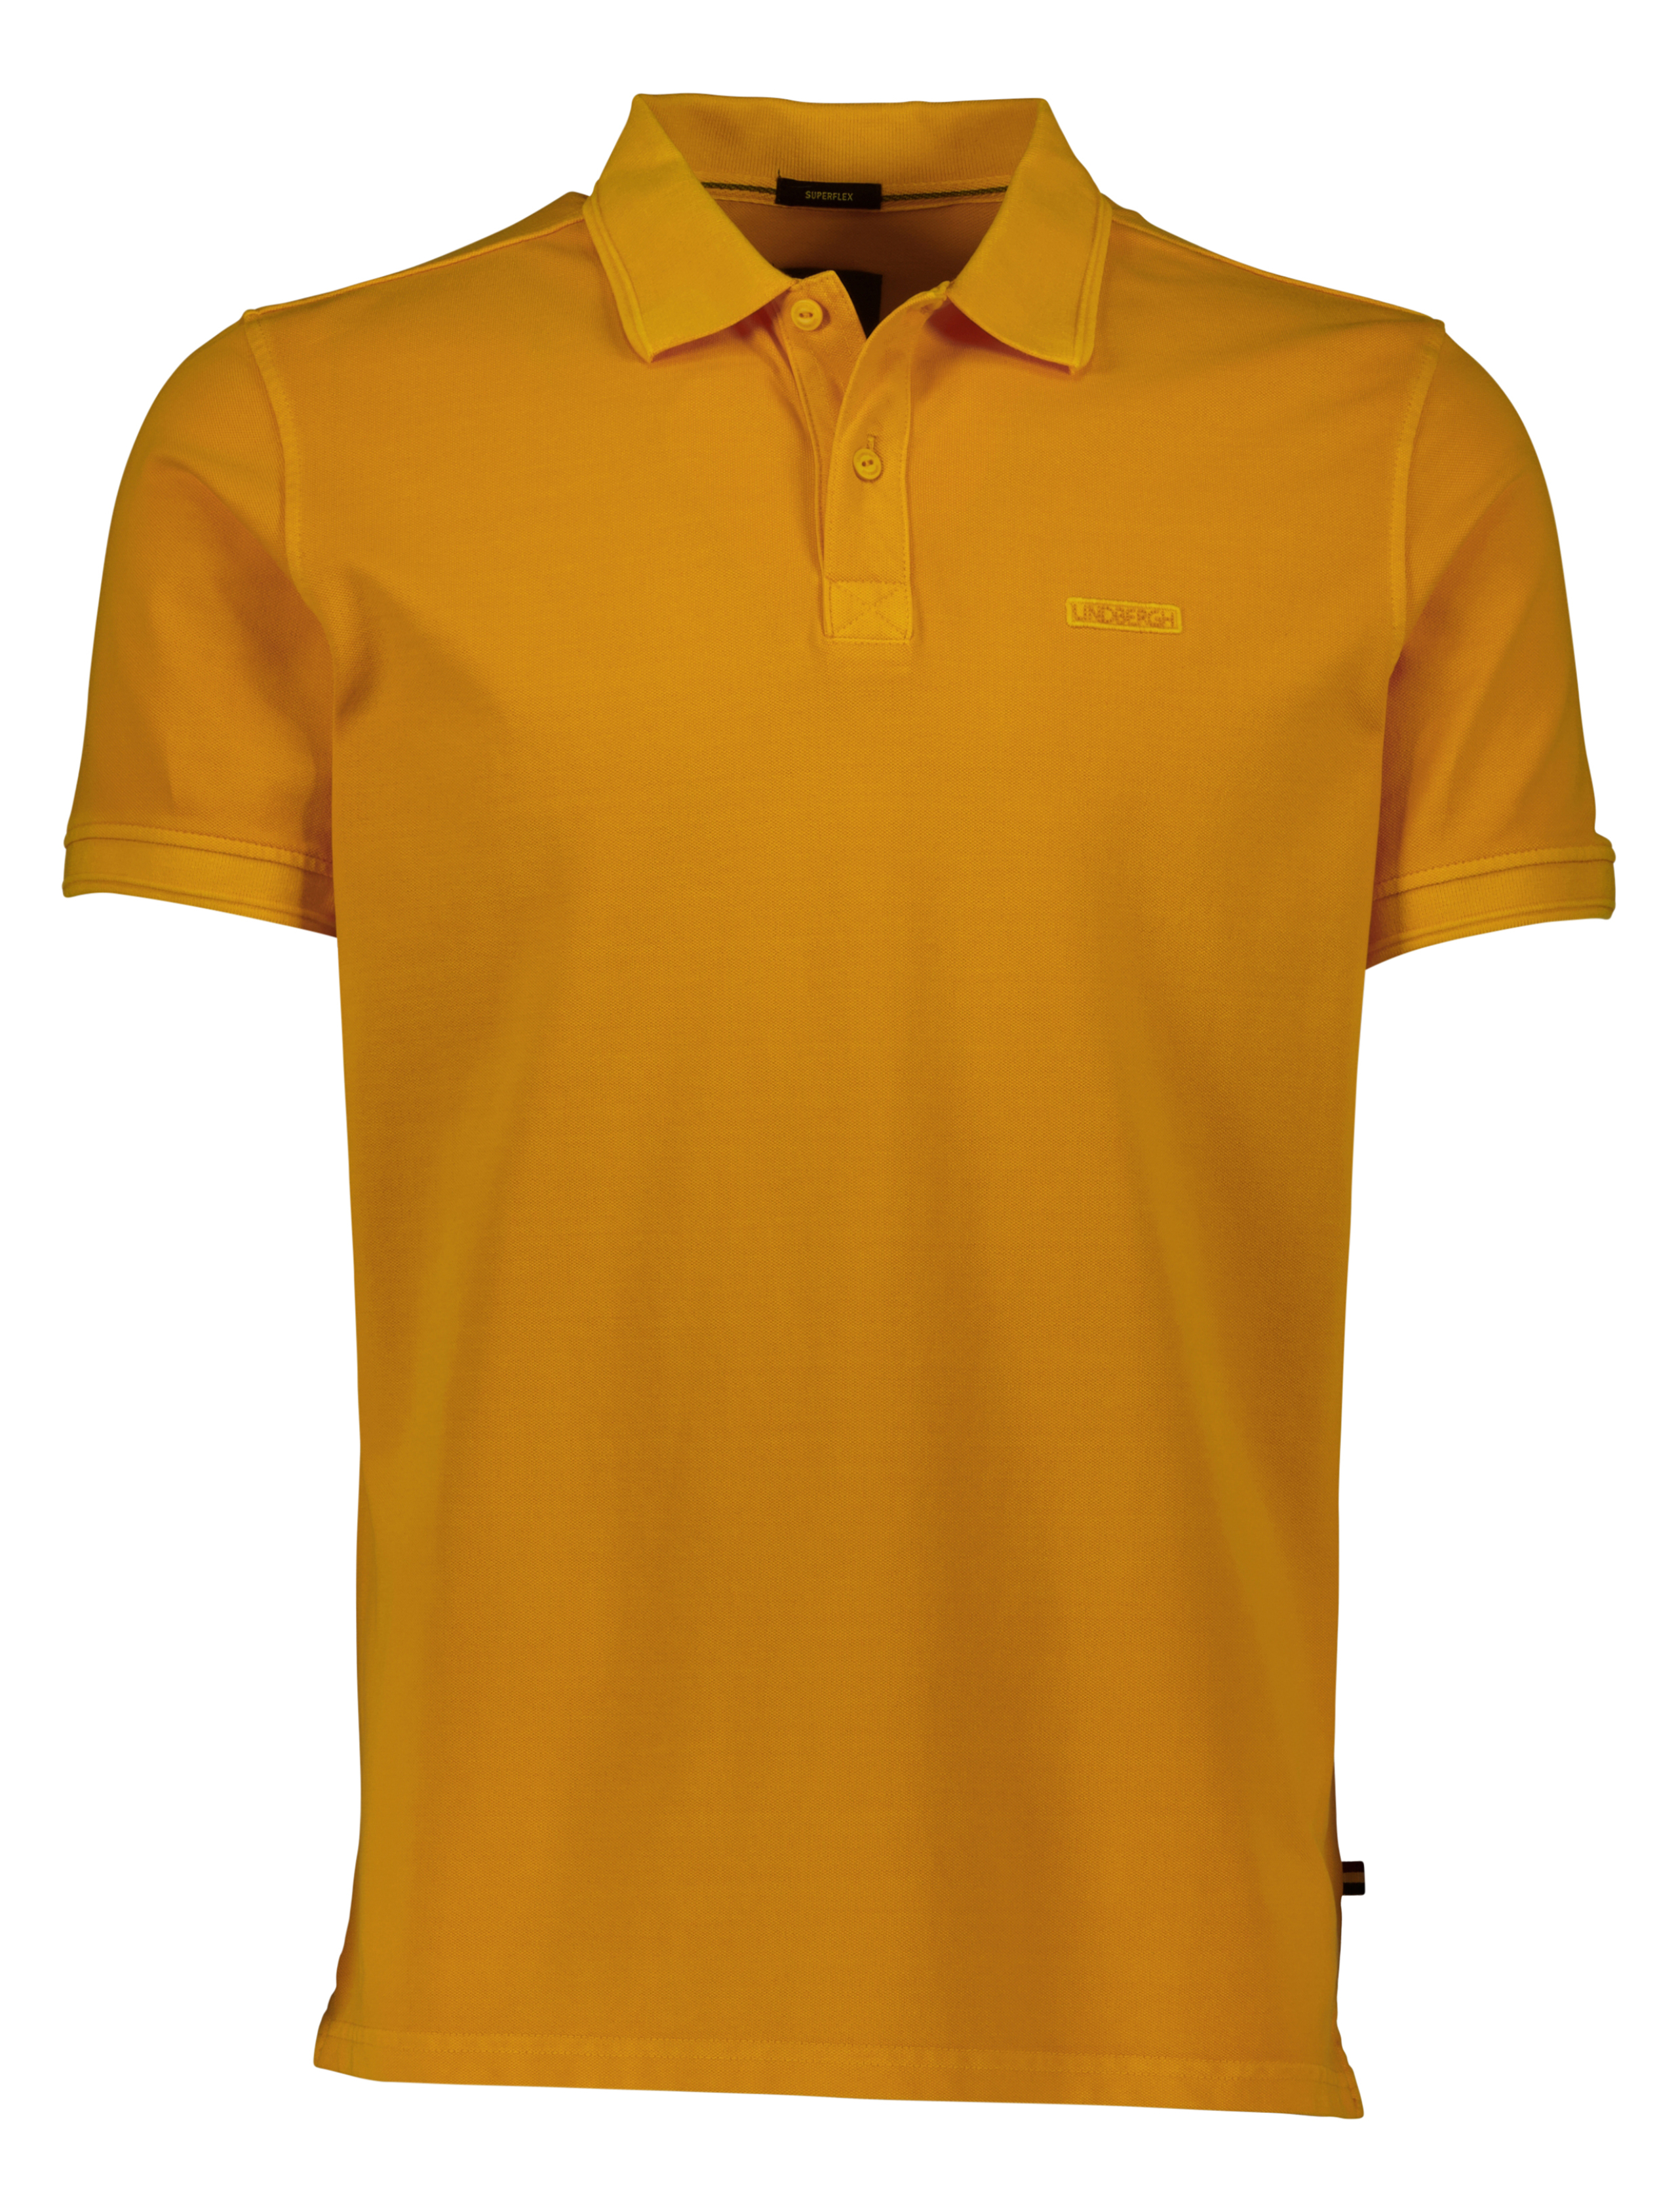 Lindbergh Polo shirt yellow / mango